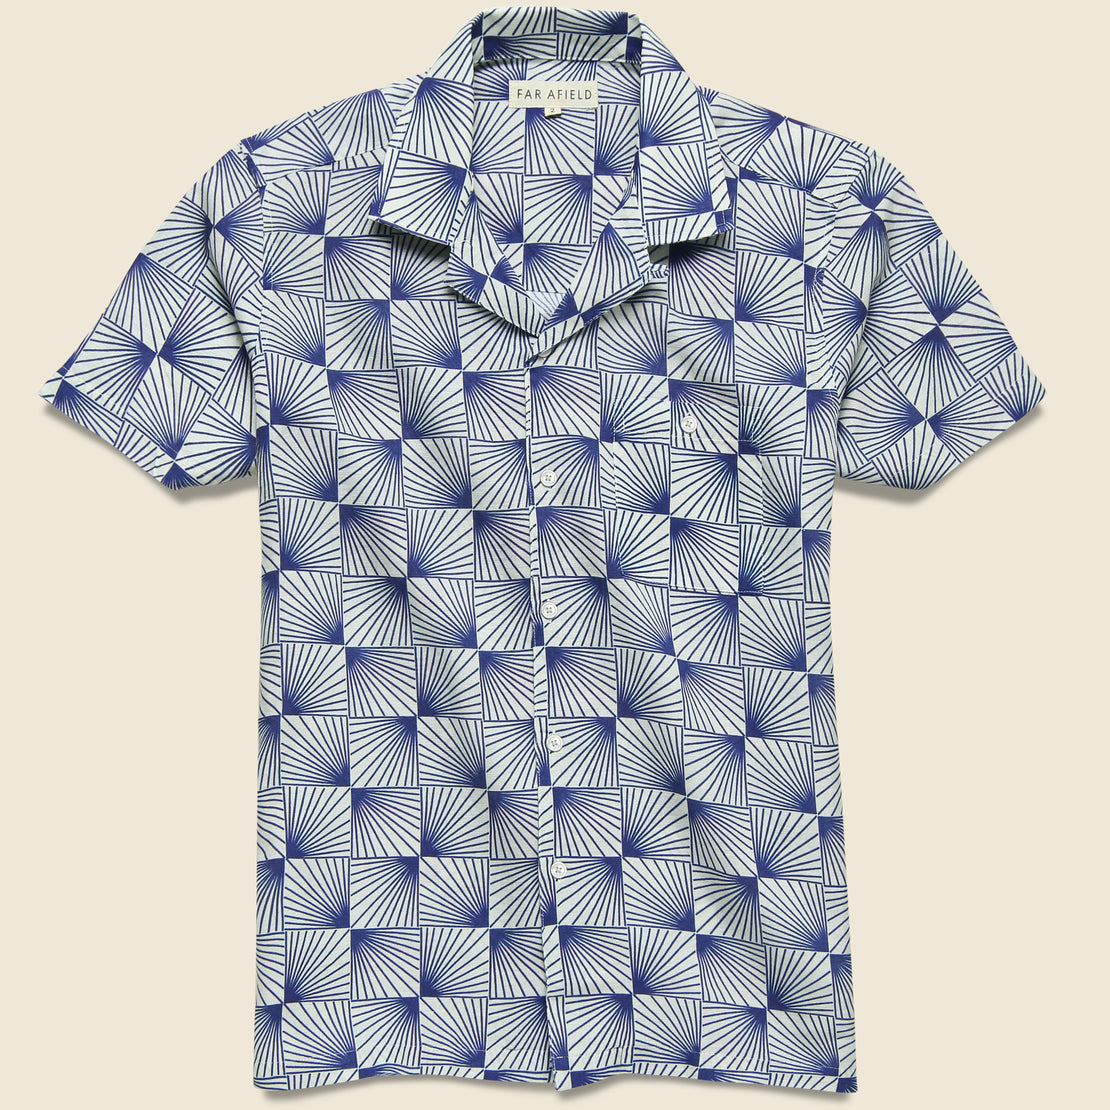 Far Afield Selleck Shirt - Monaco Blue Sun Rays